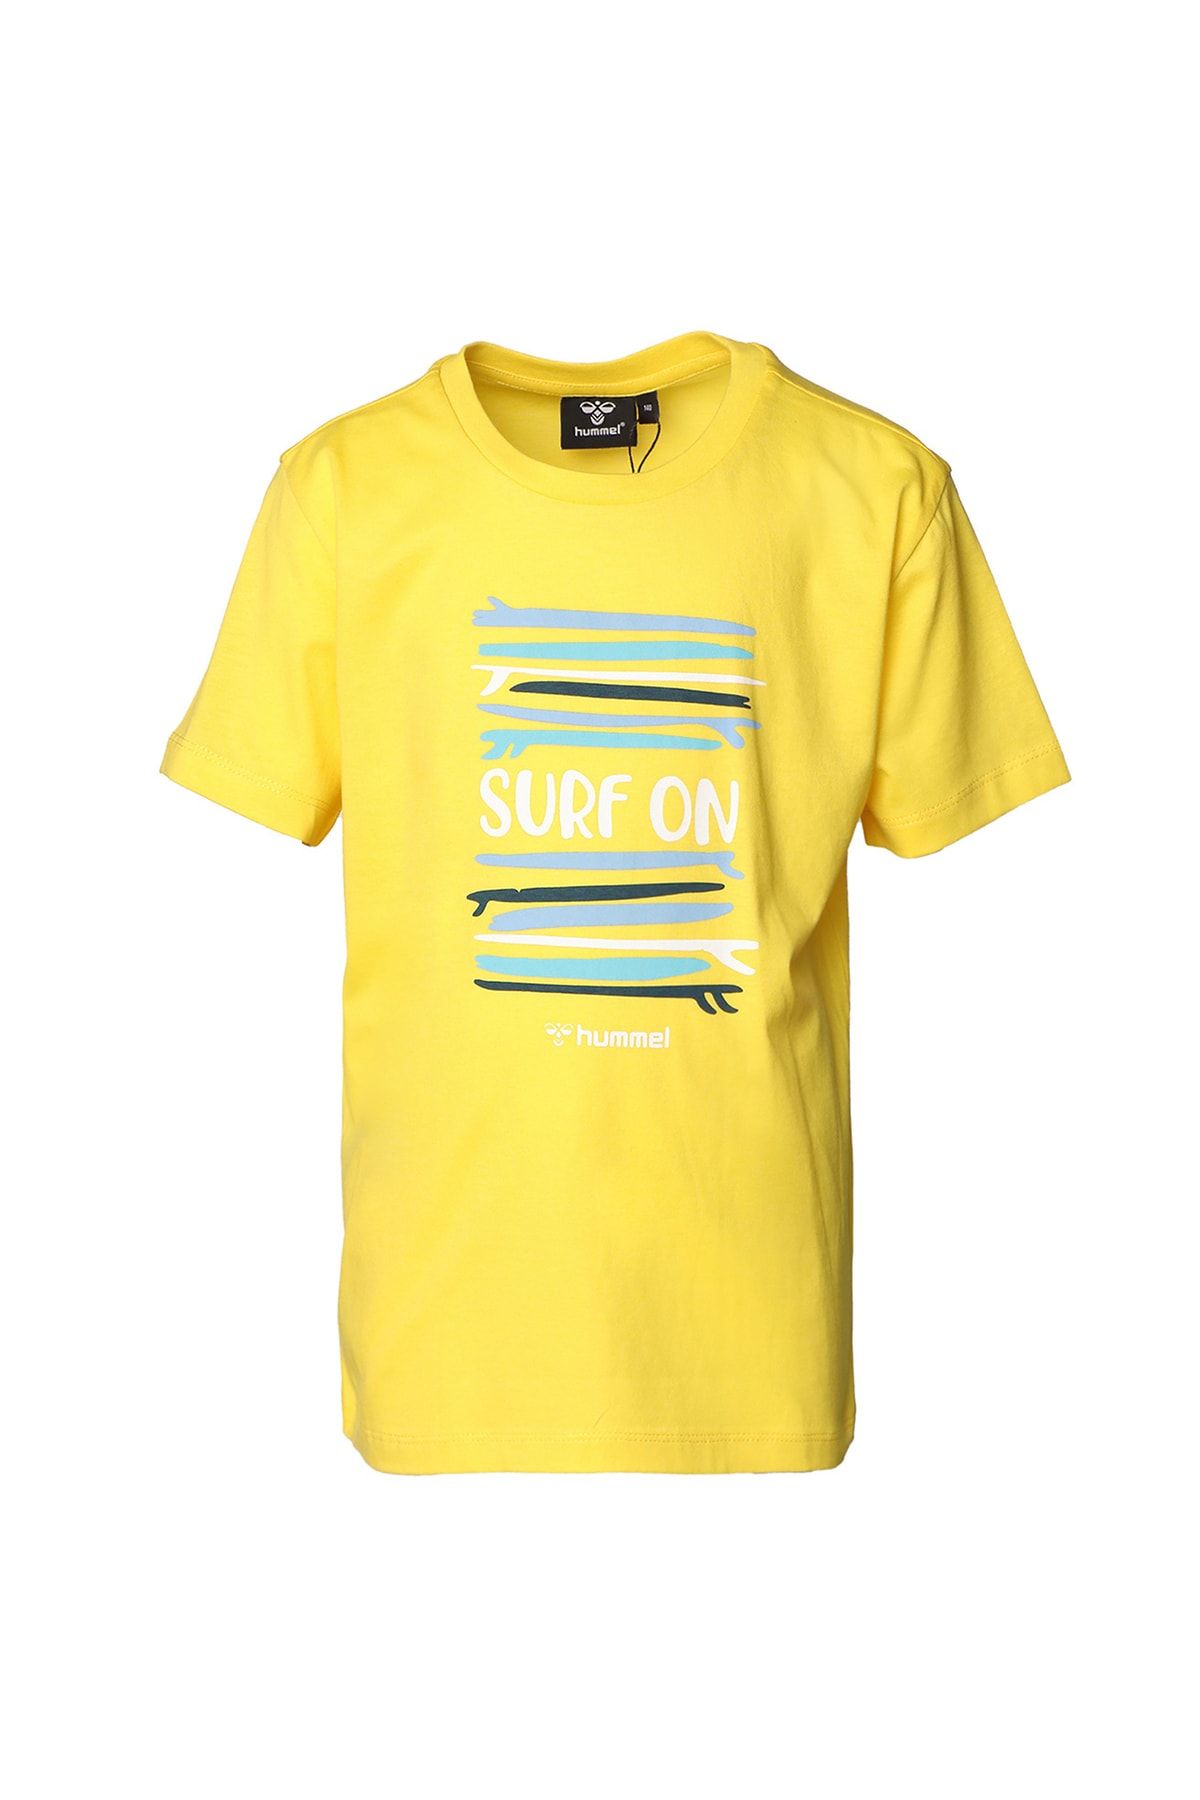 hummel تی شرت پسر زرد چاپ شده 911682-5102 HMLPACO S/S